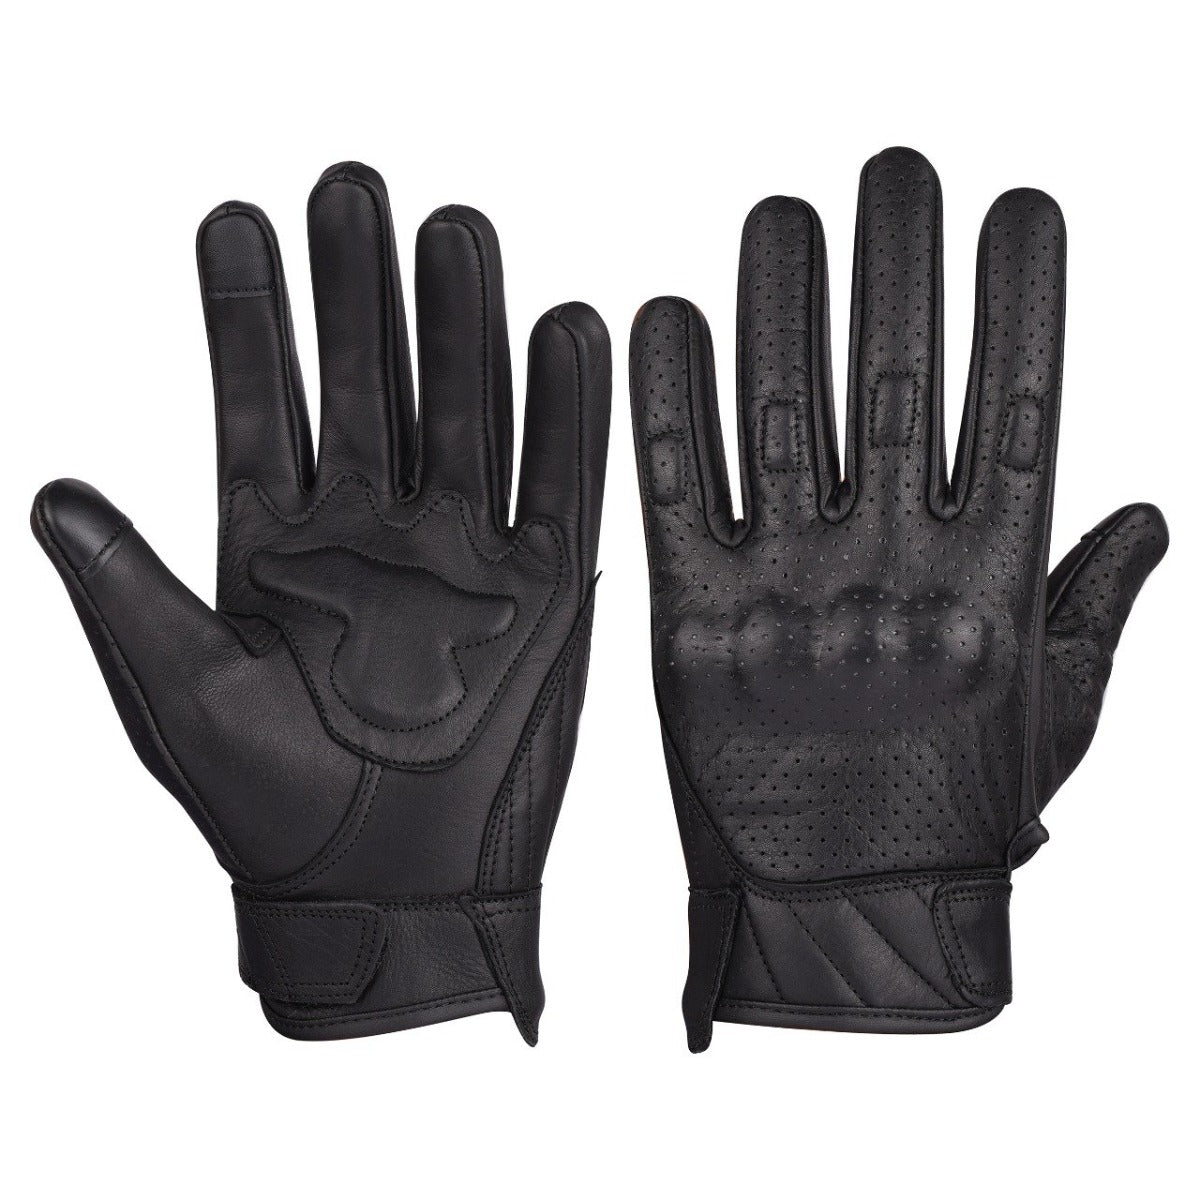 Vance Men's Premium Leather Perforated Gloves